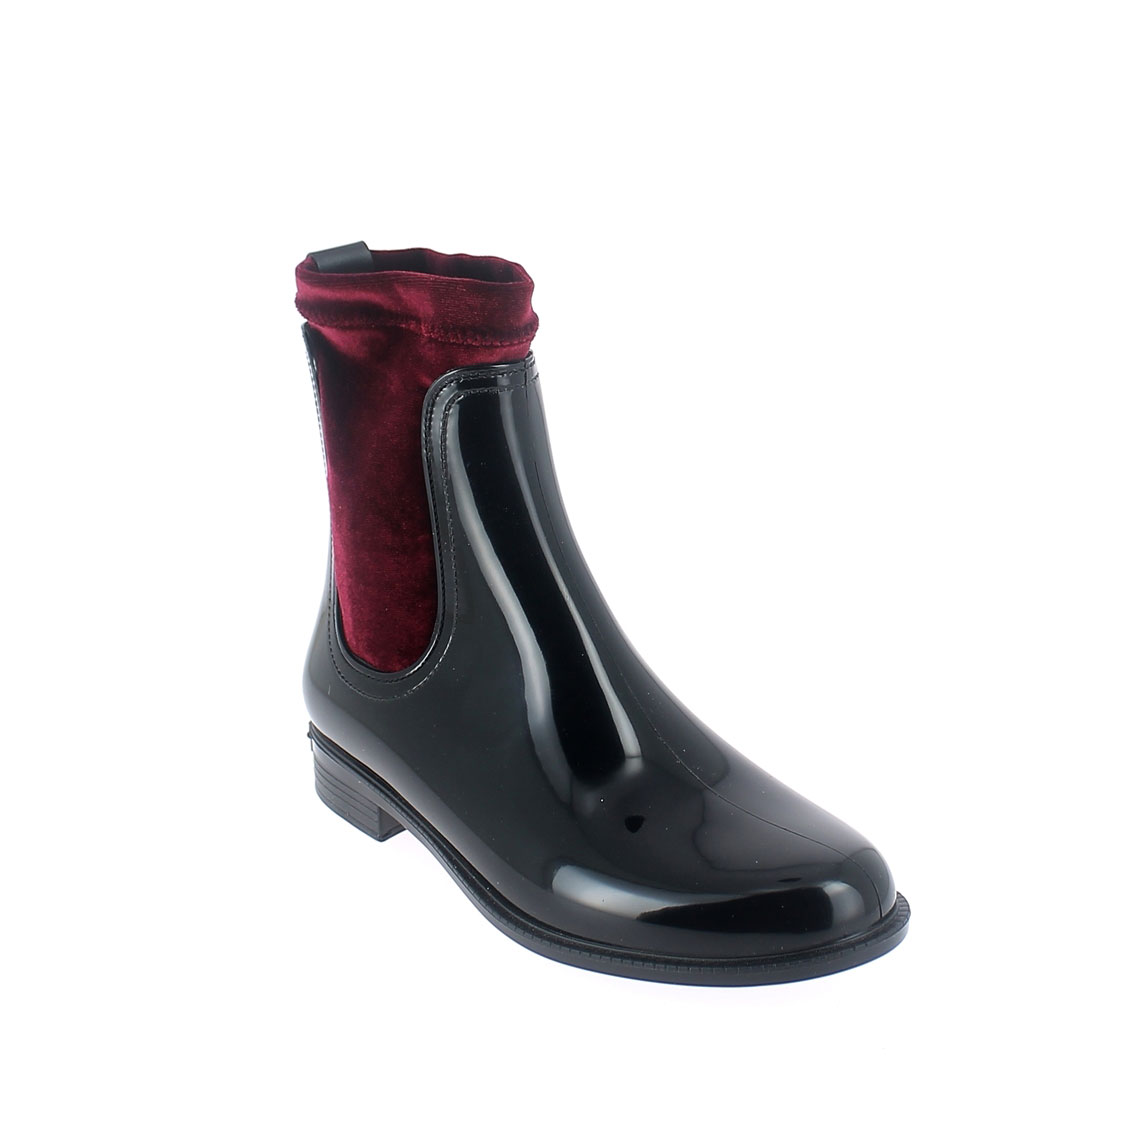 Chelsea boot in Black-Sanguinaccio pvc with stretch velvet lining